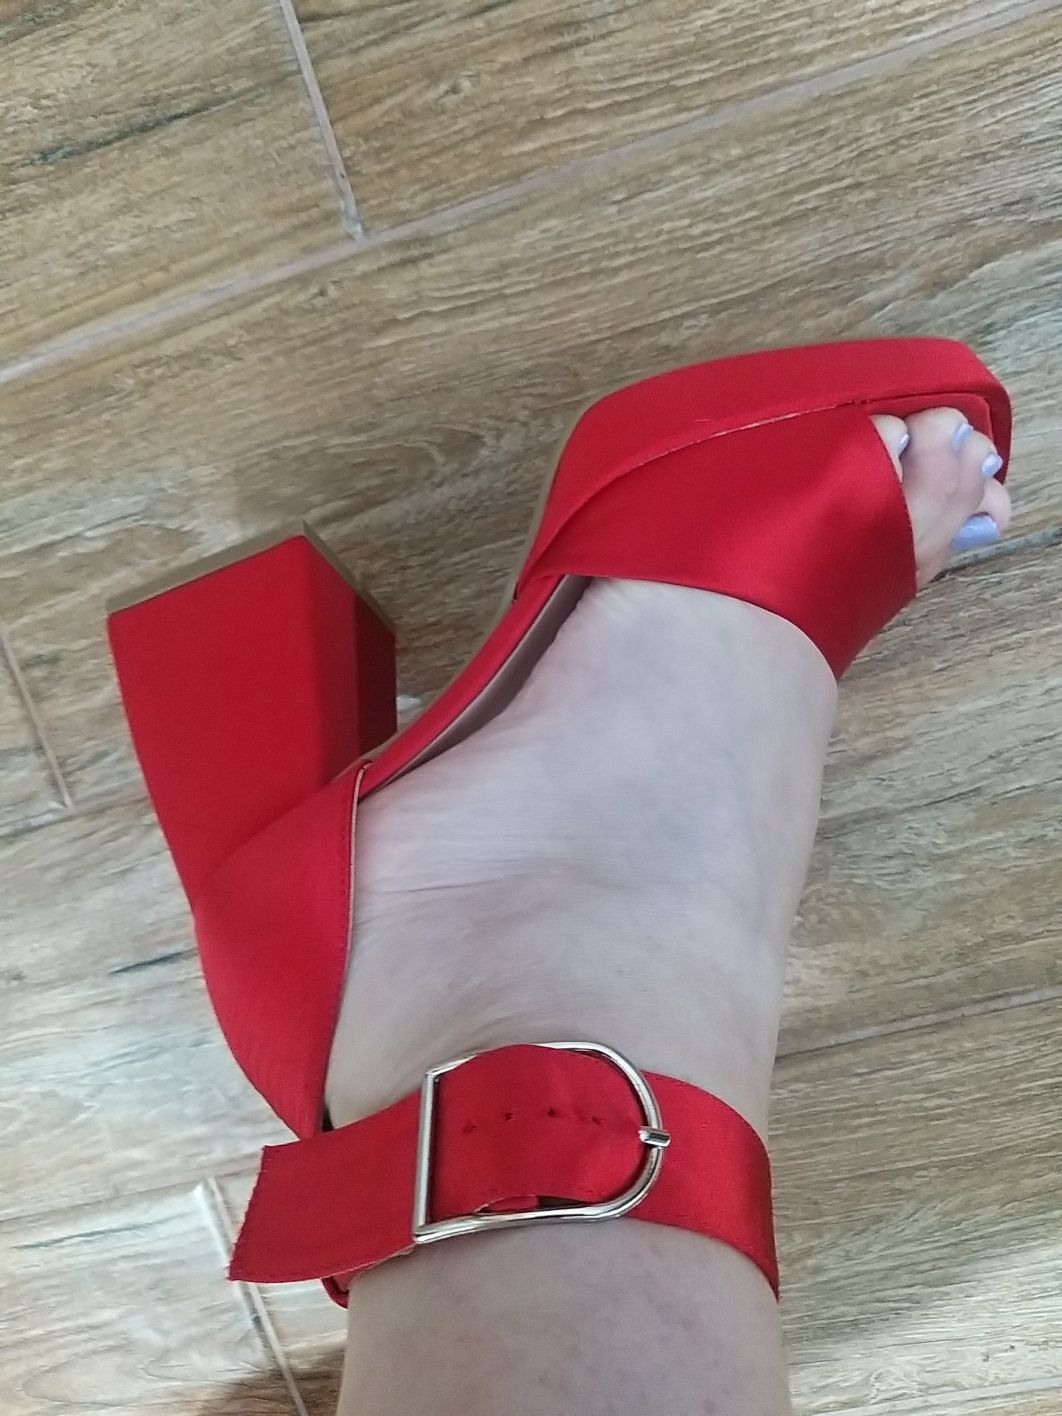 Sandale rosii noi